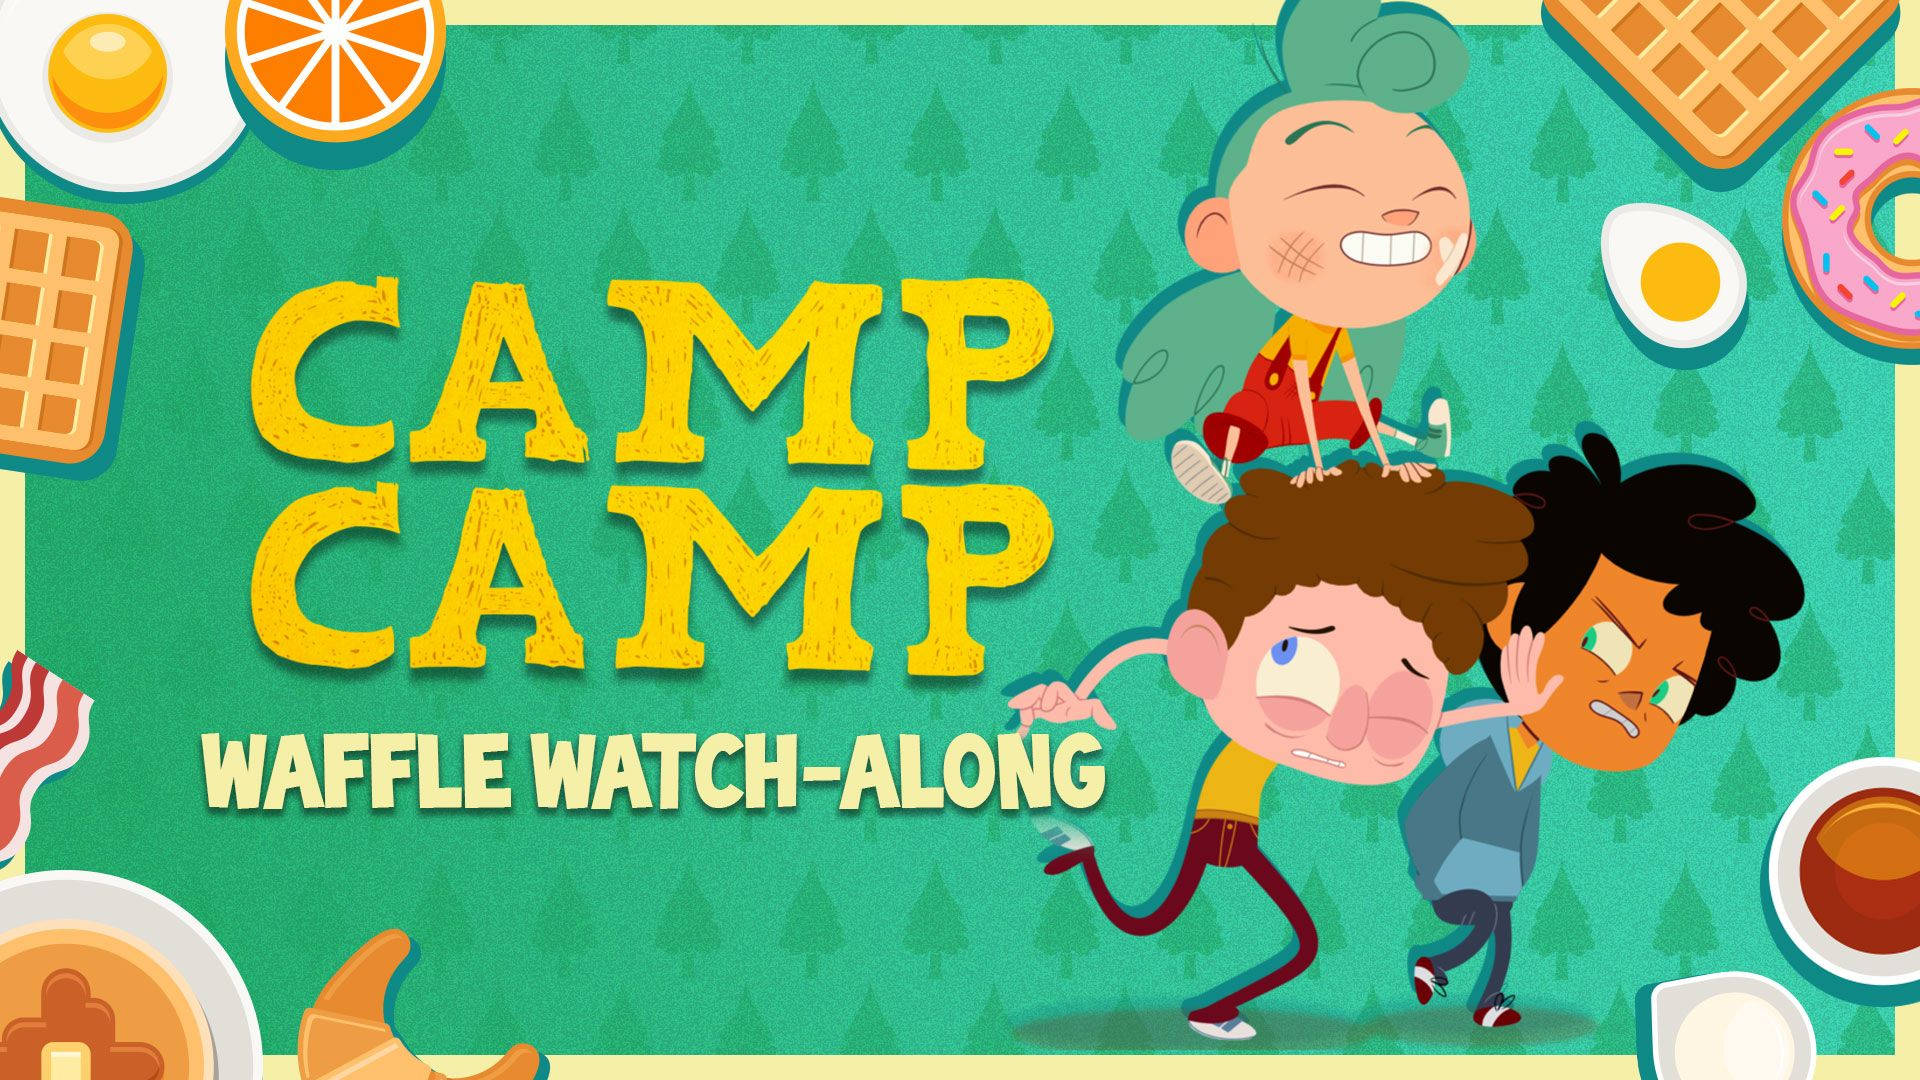 Camp Camp Waffle Watch-along